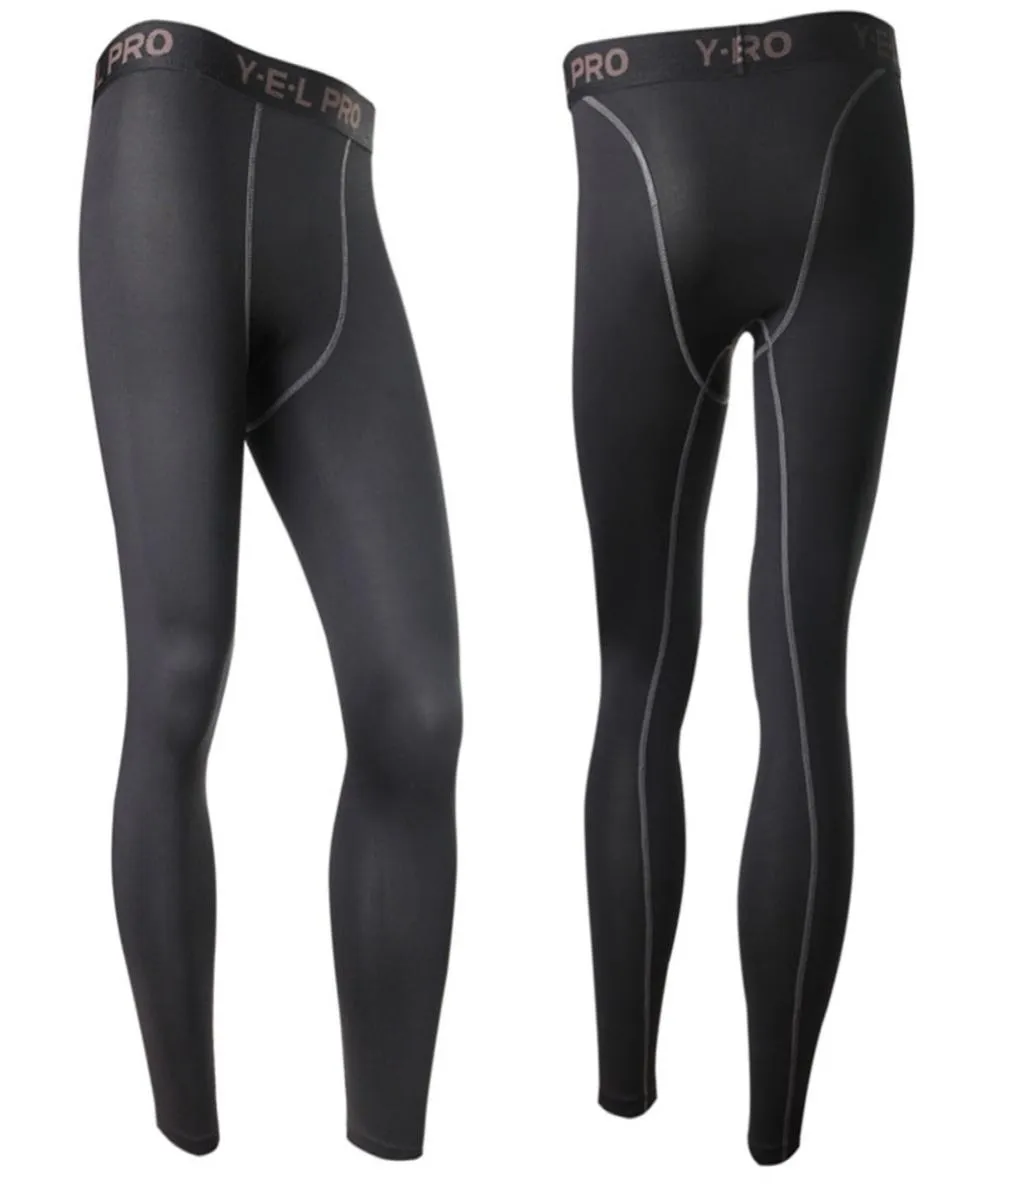 WholeNew Men039s Compression Base Layer Pants Long Tight Under Skin Sportswear Gear Bottom2095039